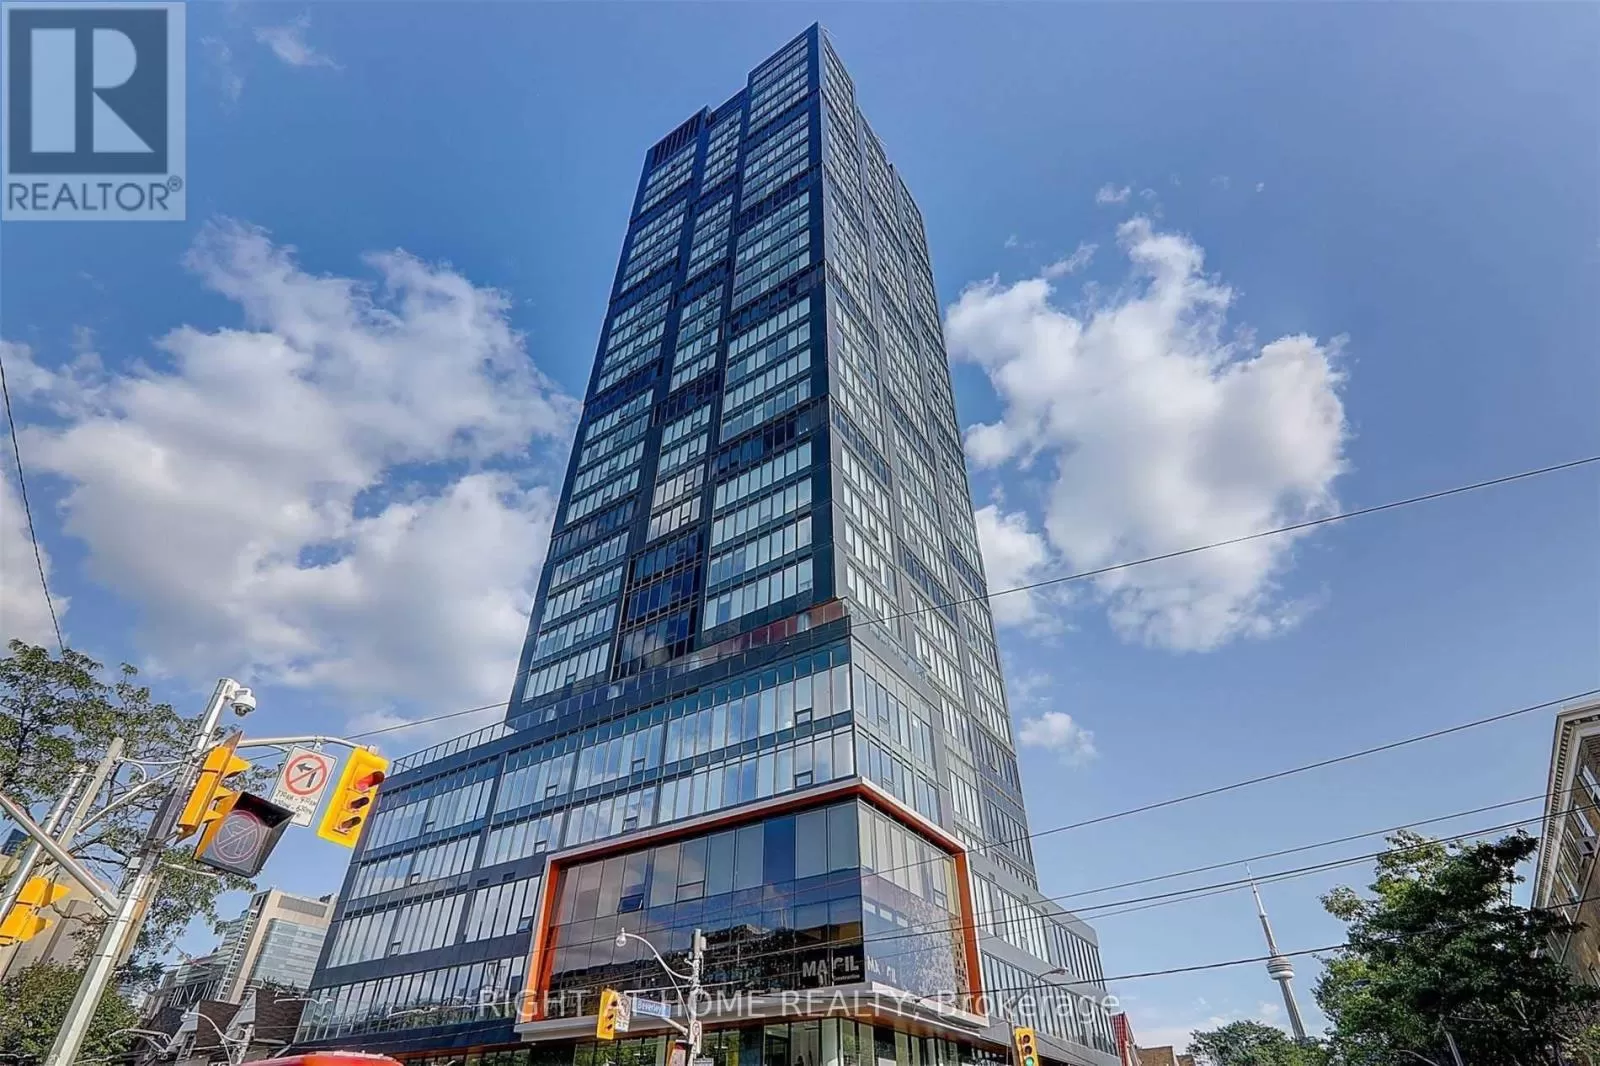 Apartment for rent: 3004 - 203 College Street, Toronto, Ontario M5T 1P9